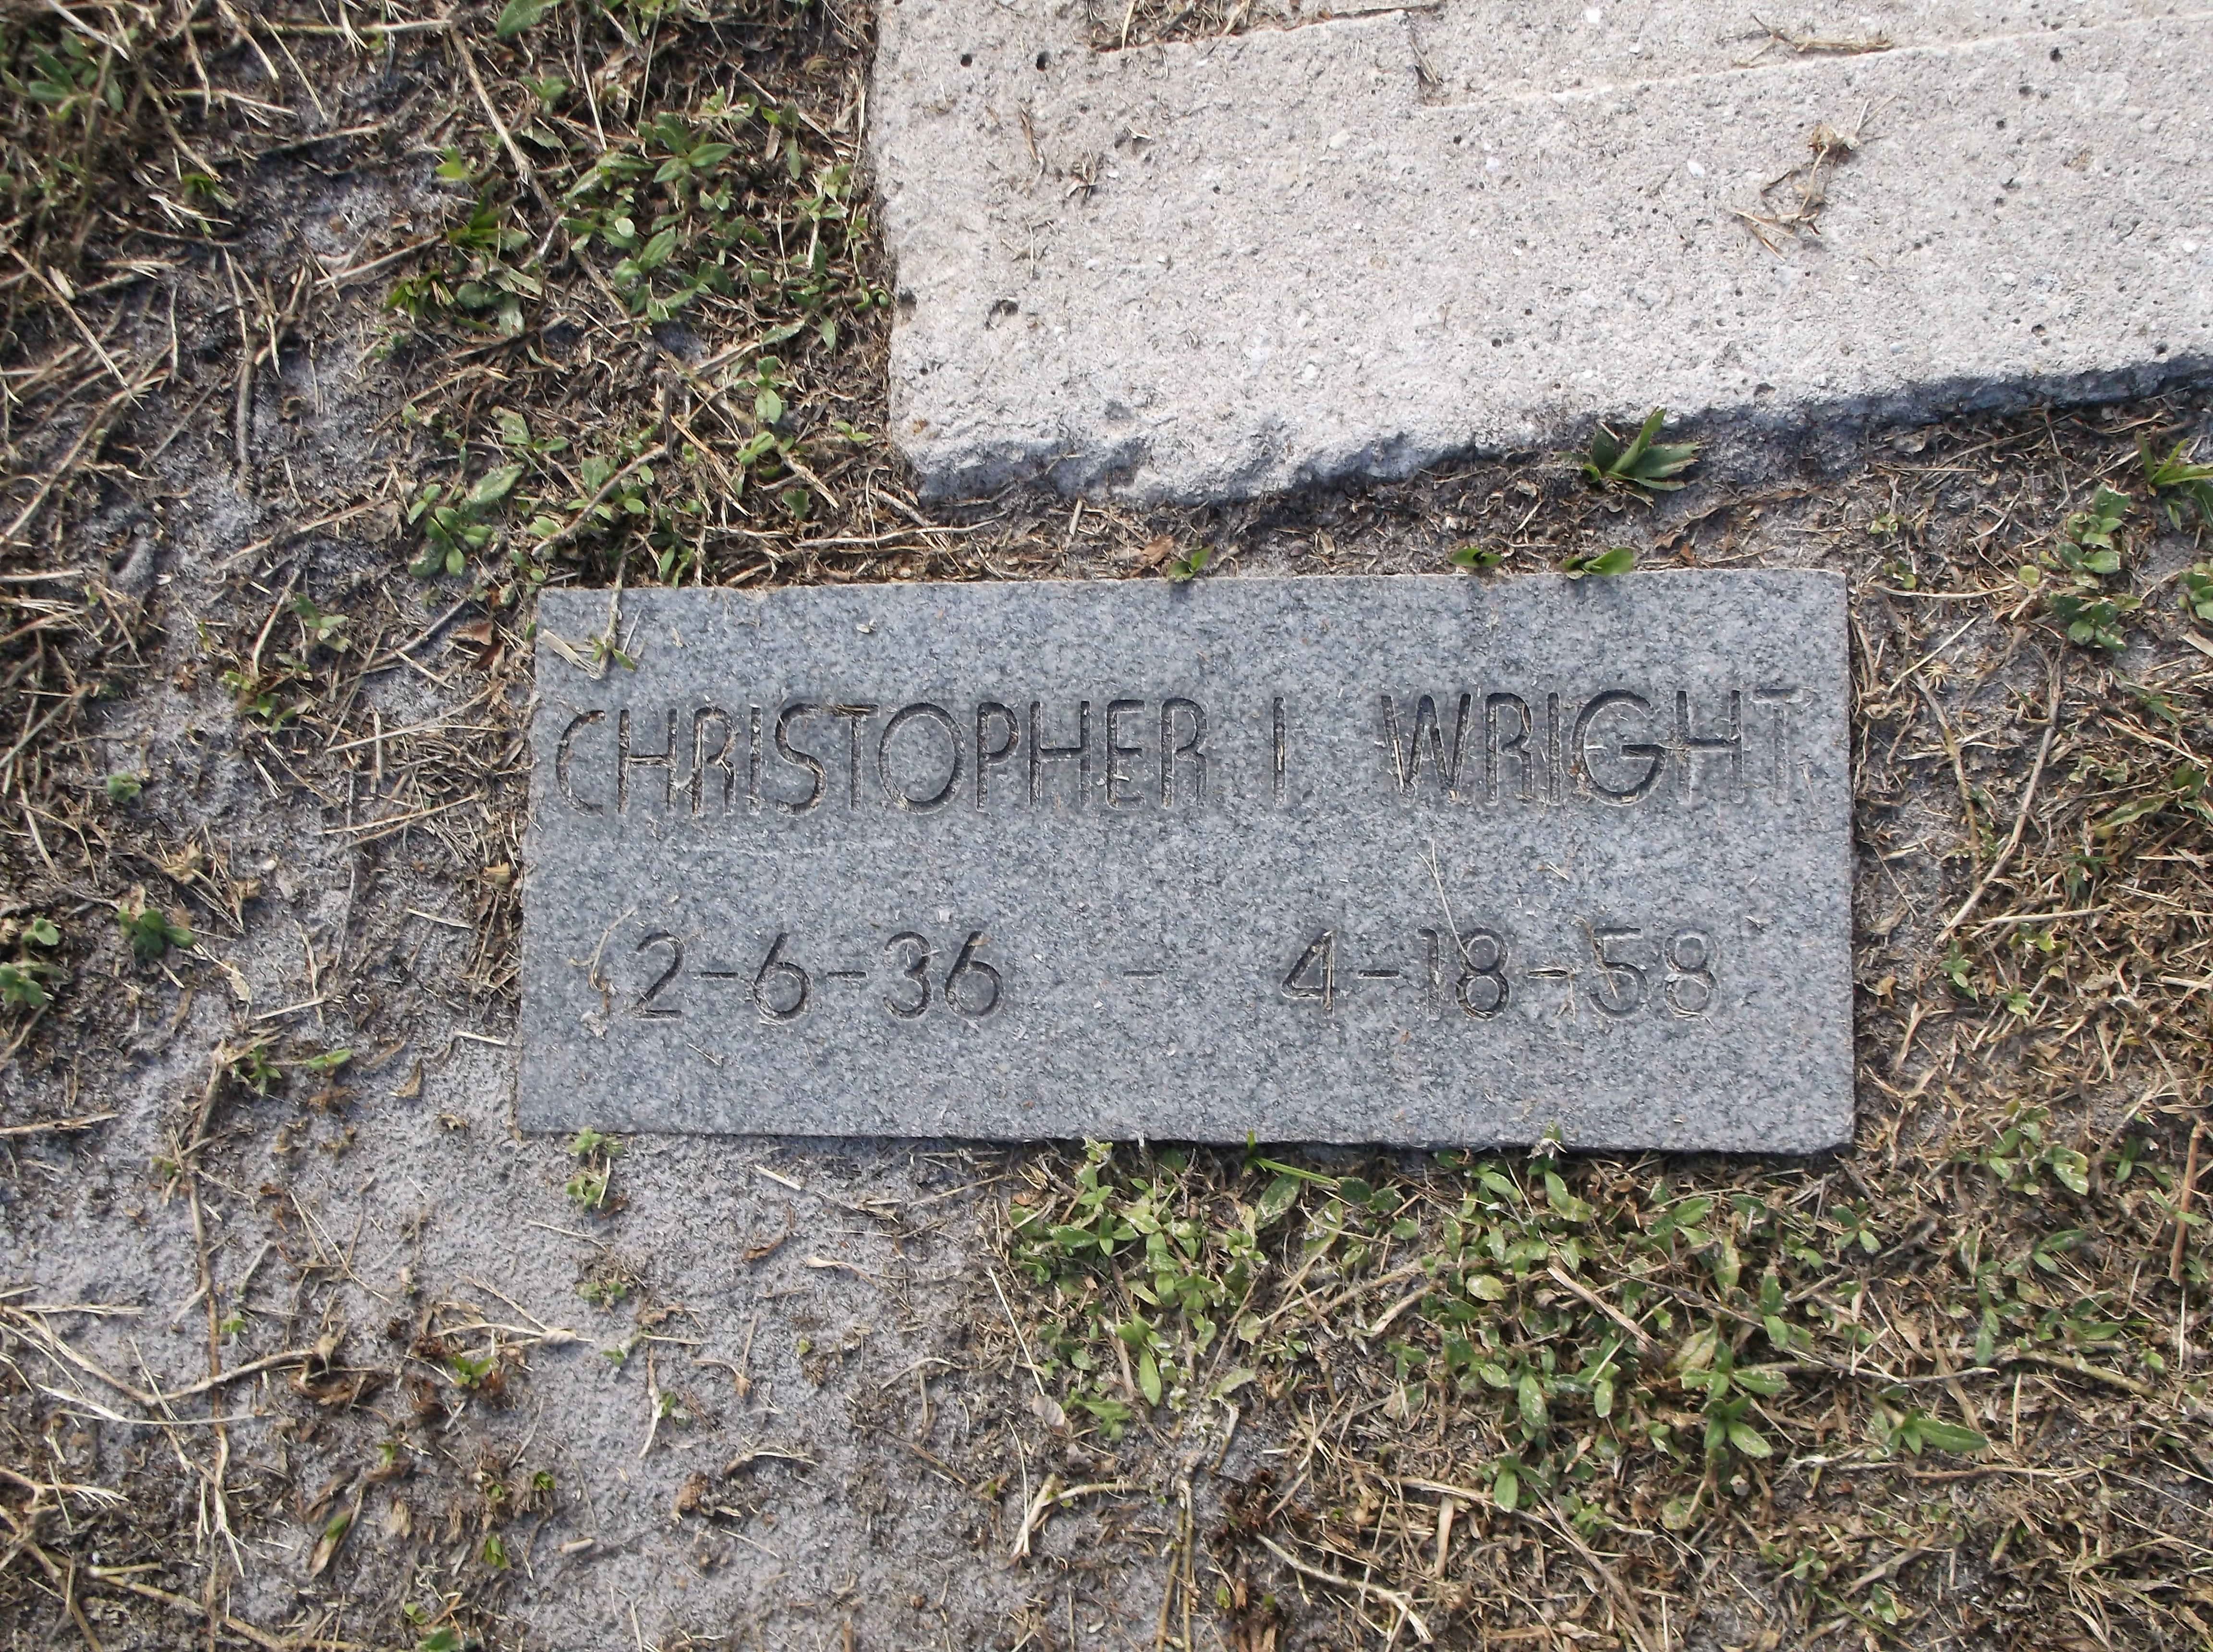 Christopher I Wright